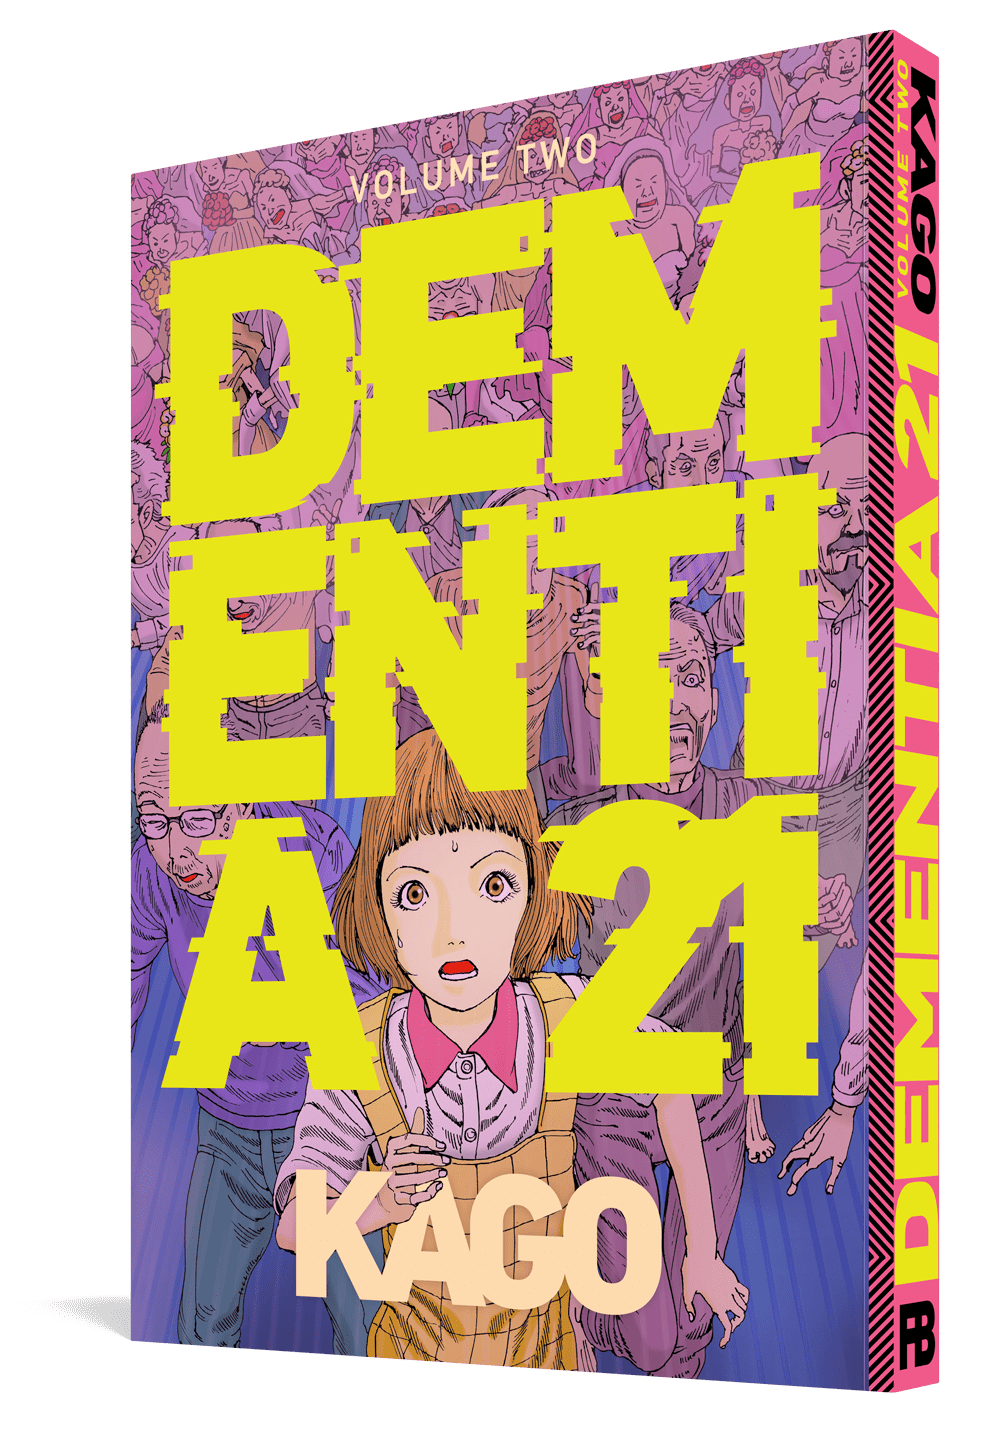 Dementia 21 Vol. 2 by Shintaro Kago & Rachel Thorn